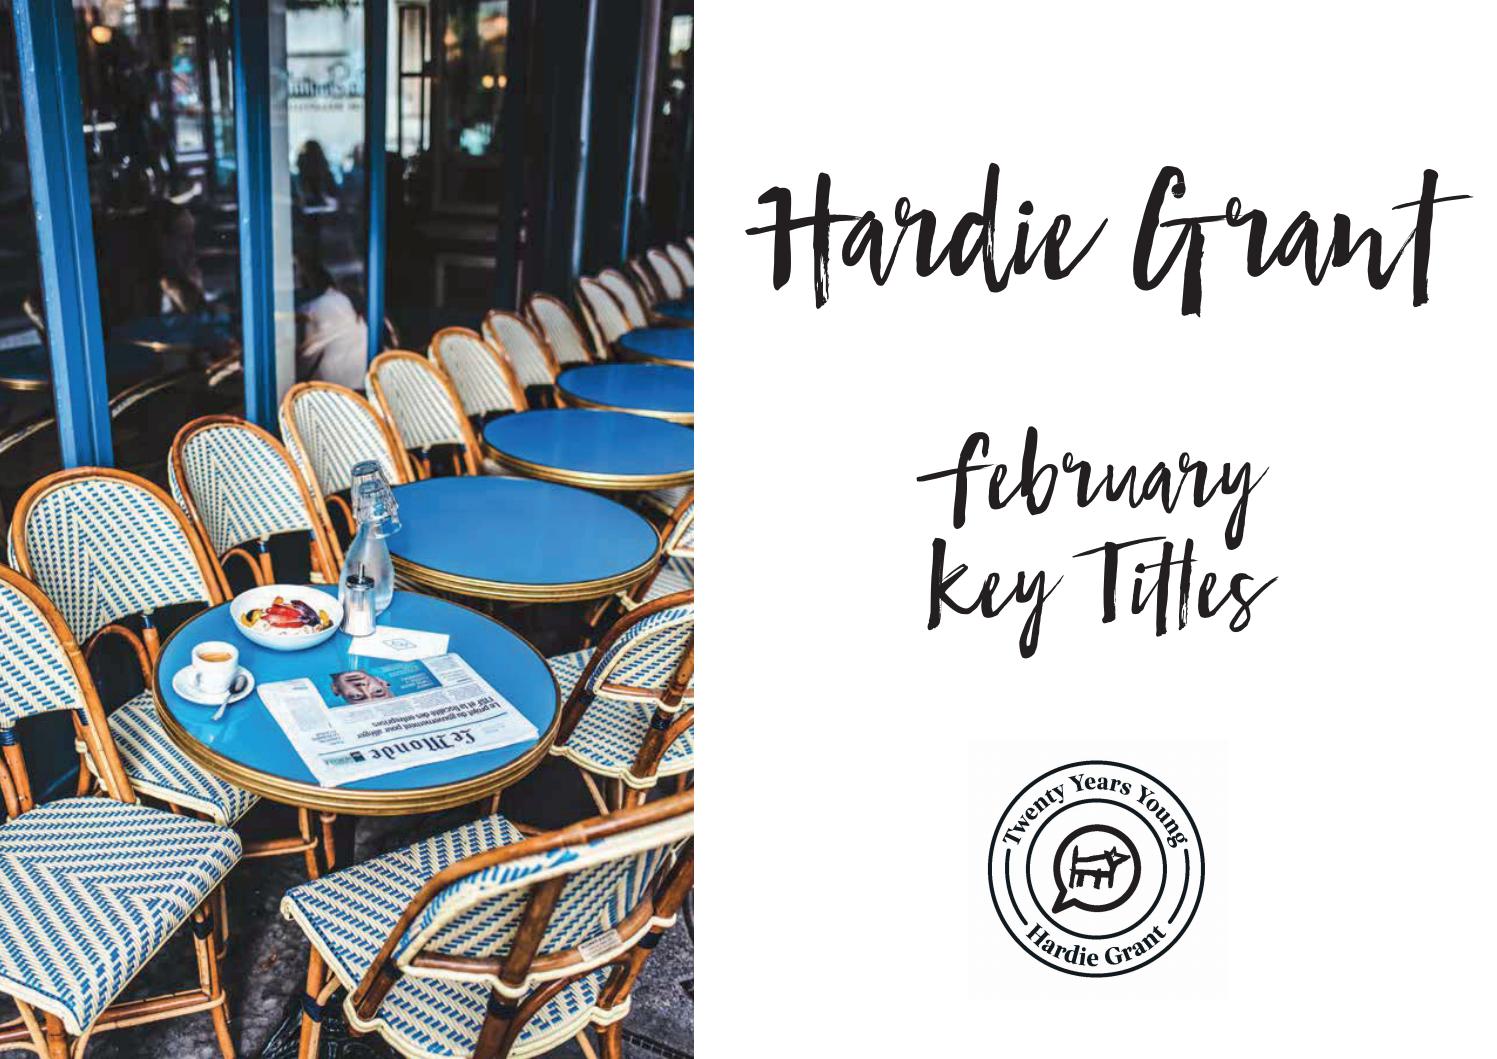 Table De Jardin En Bois Charmant Hgbooks Key Titles February 2018 by Har Grant Publishing